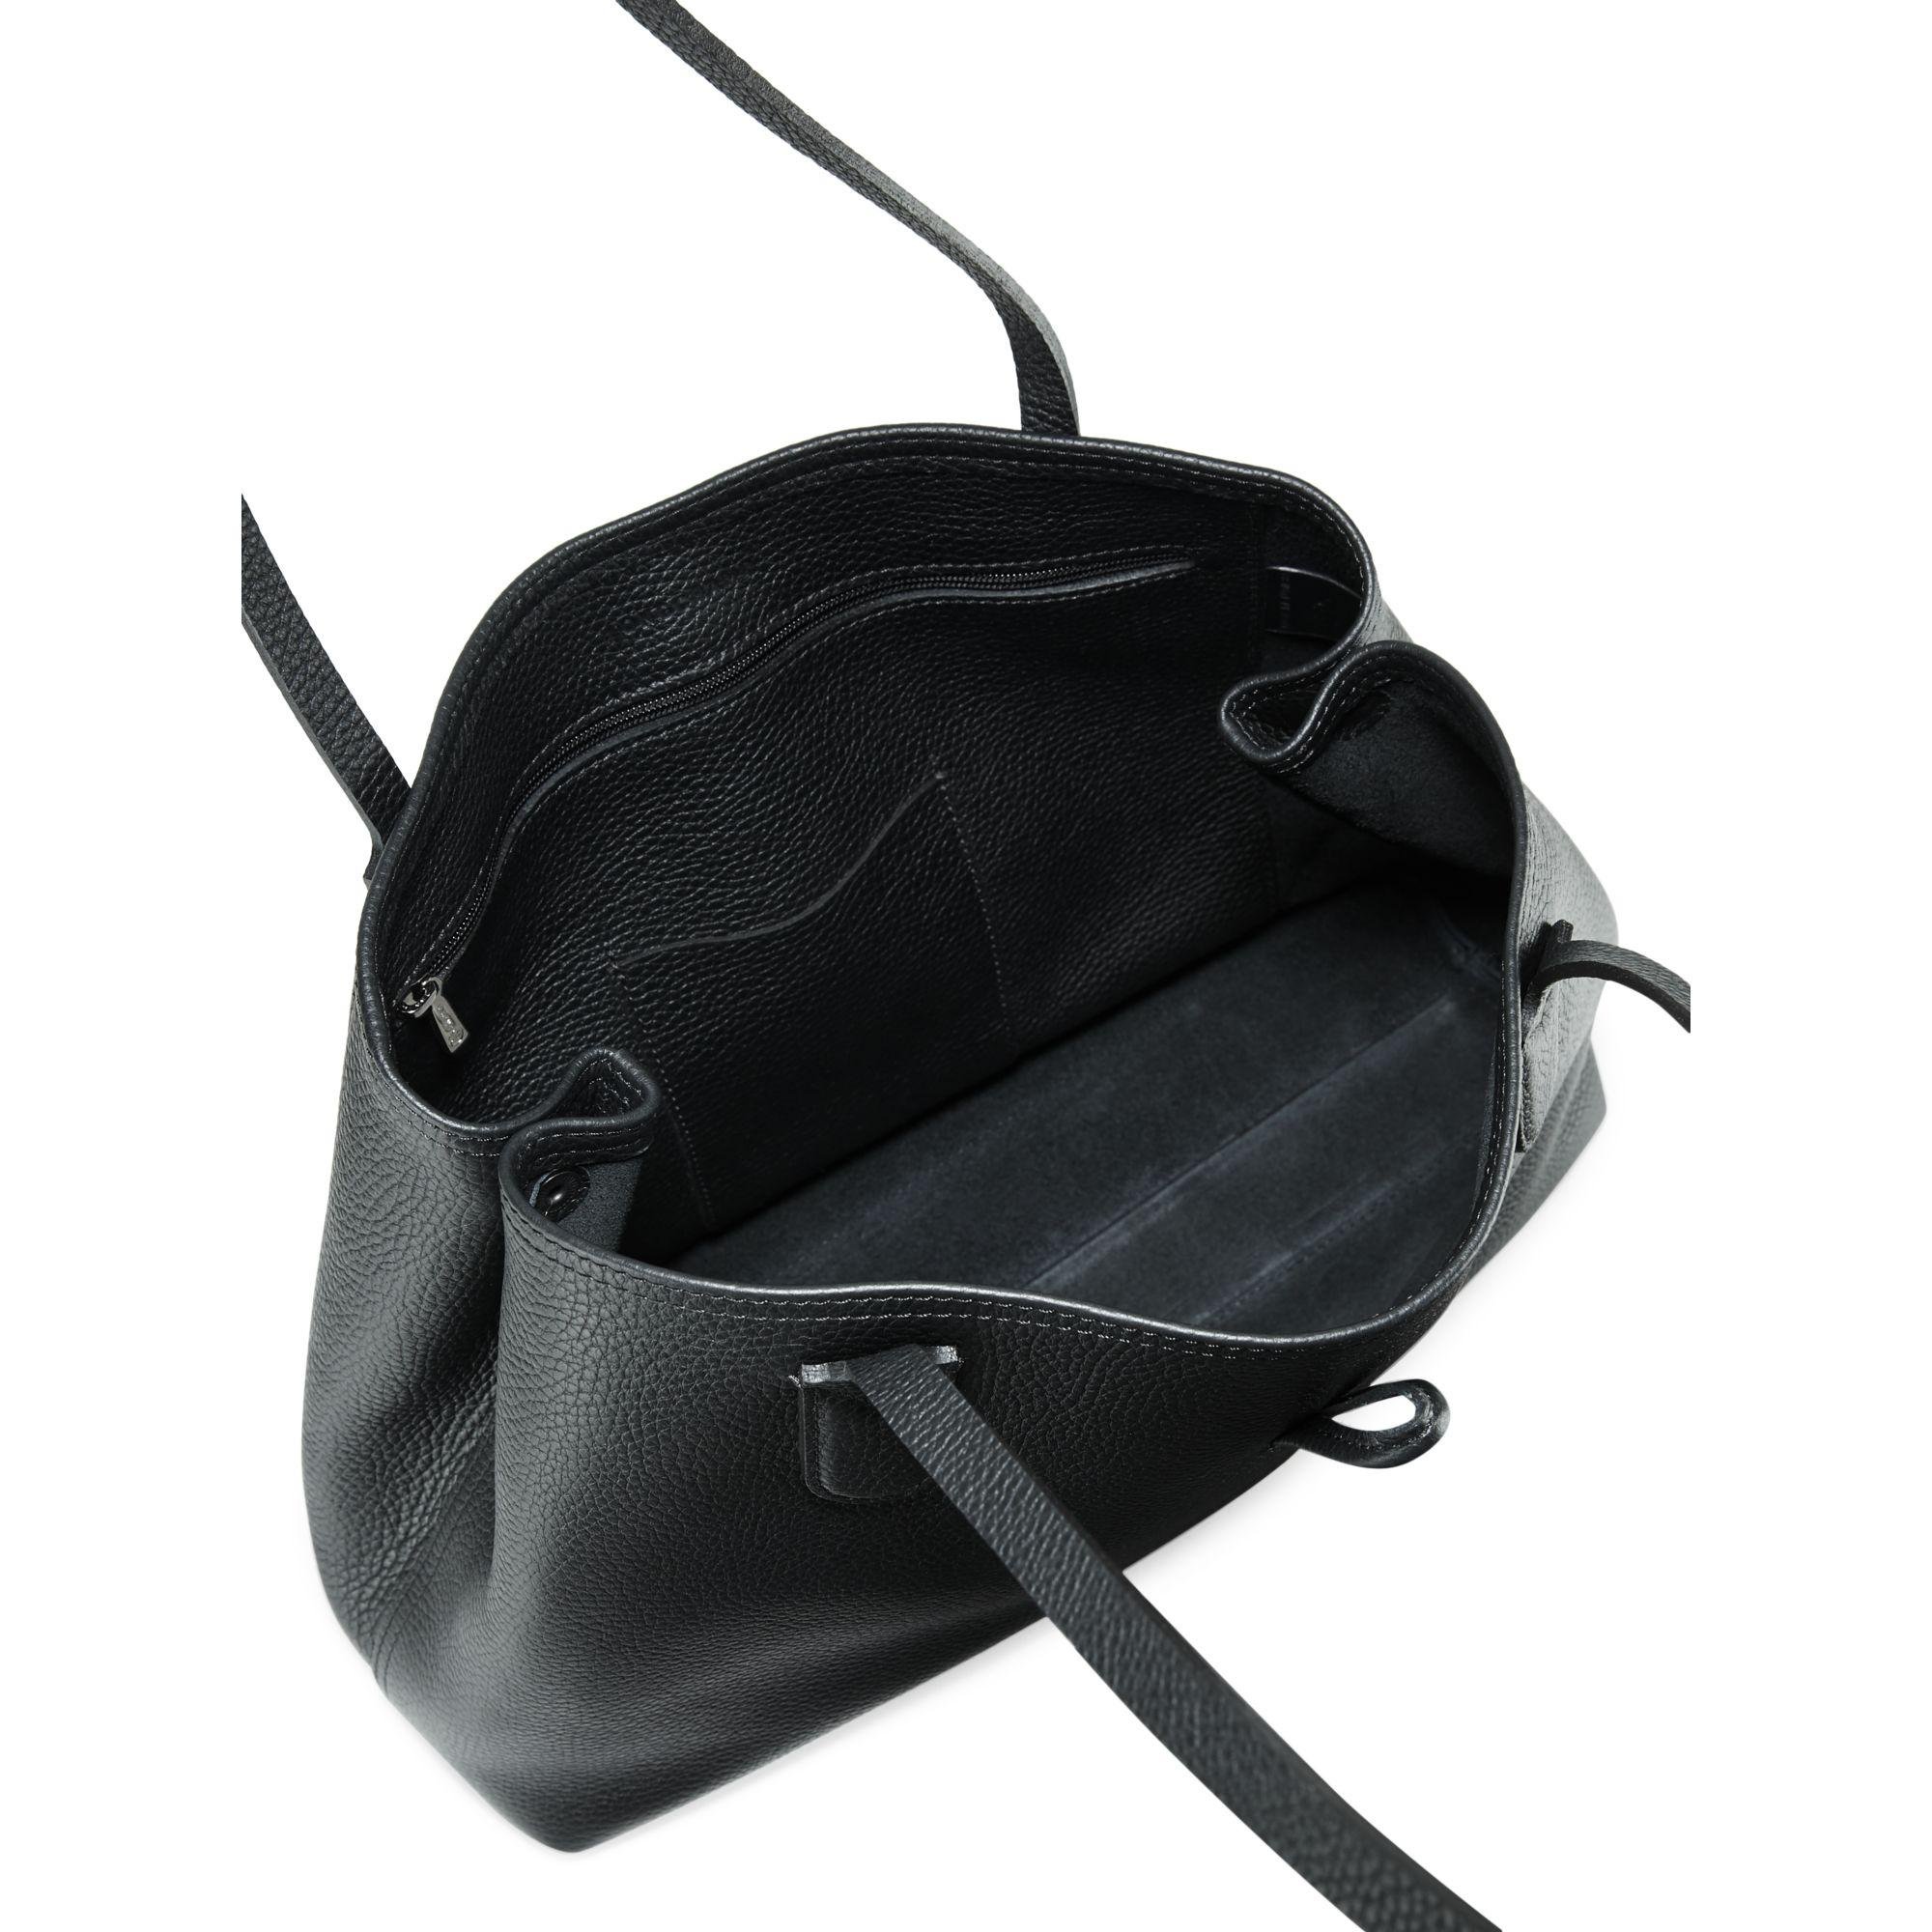 Longchamp Roseau Essential Medium Leather Shoulder Tote Bag in Black - Lyst